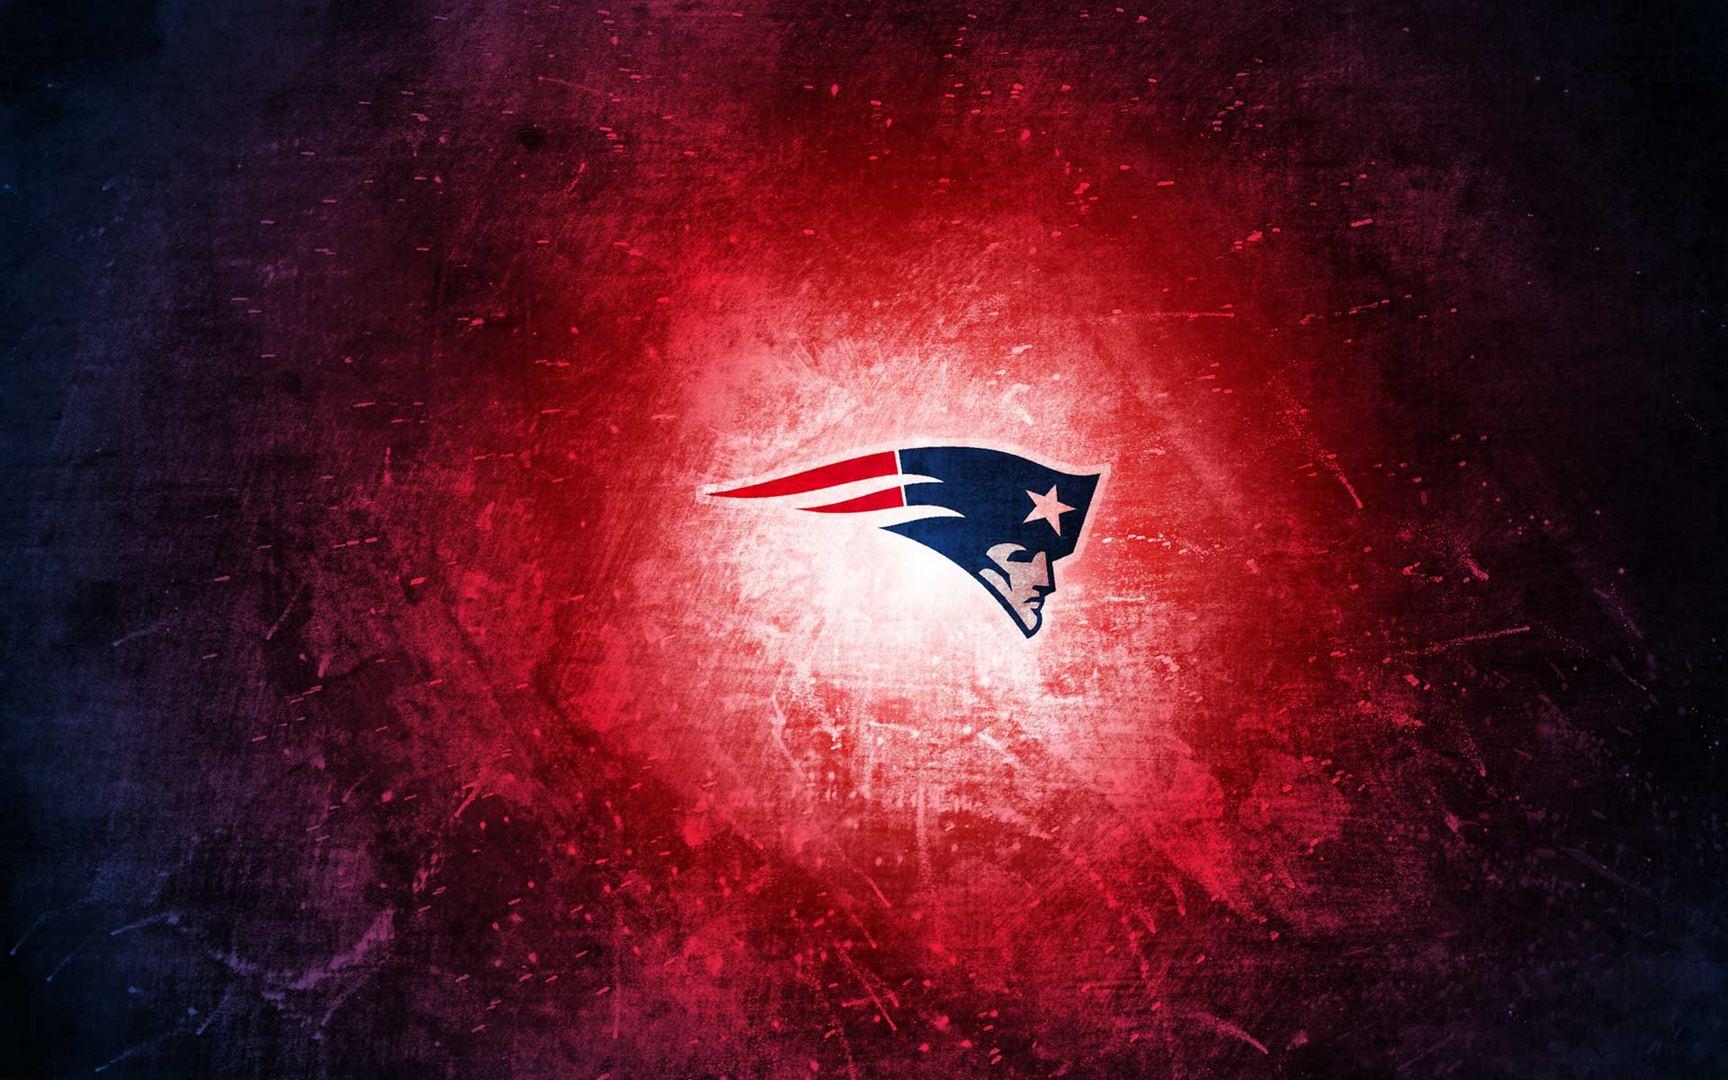 New England Patriots wallpaper HD free download